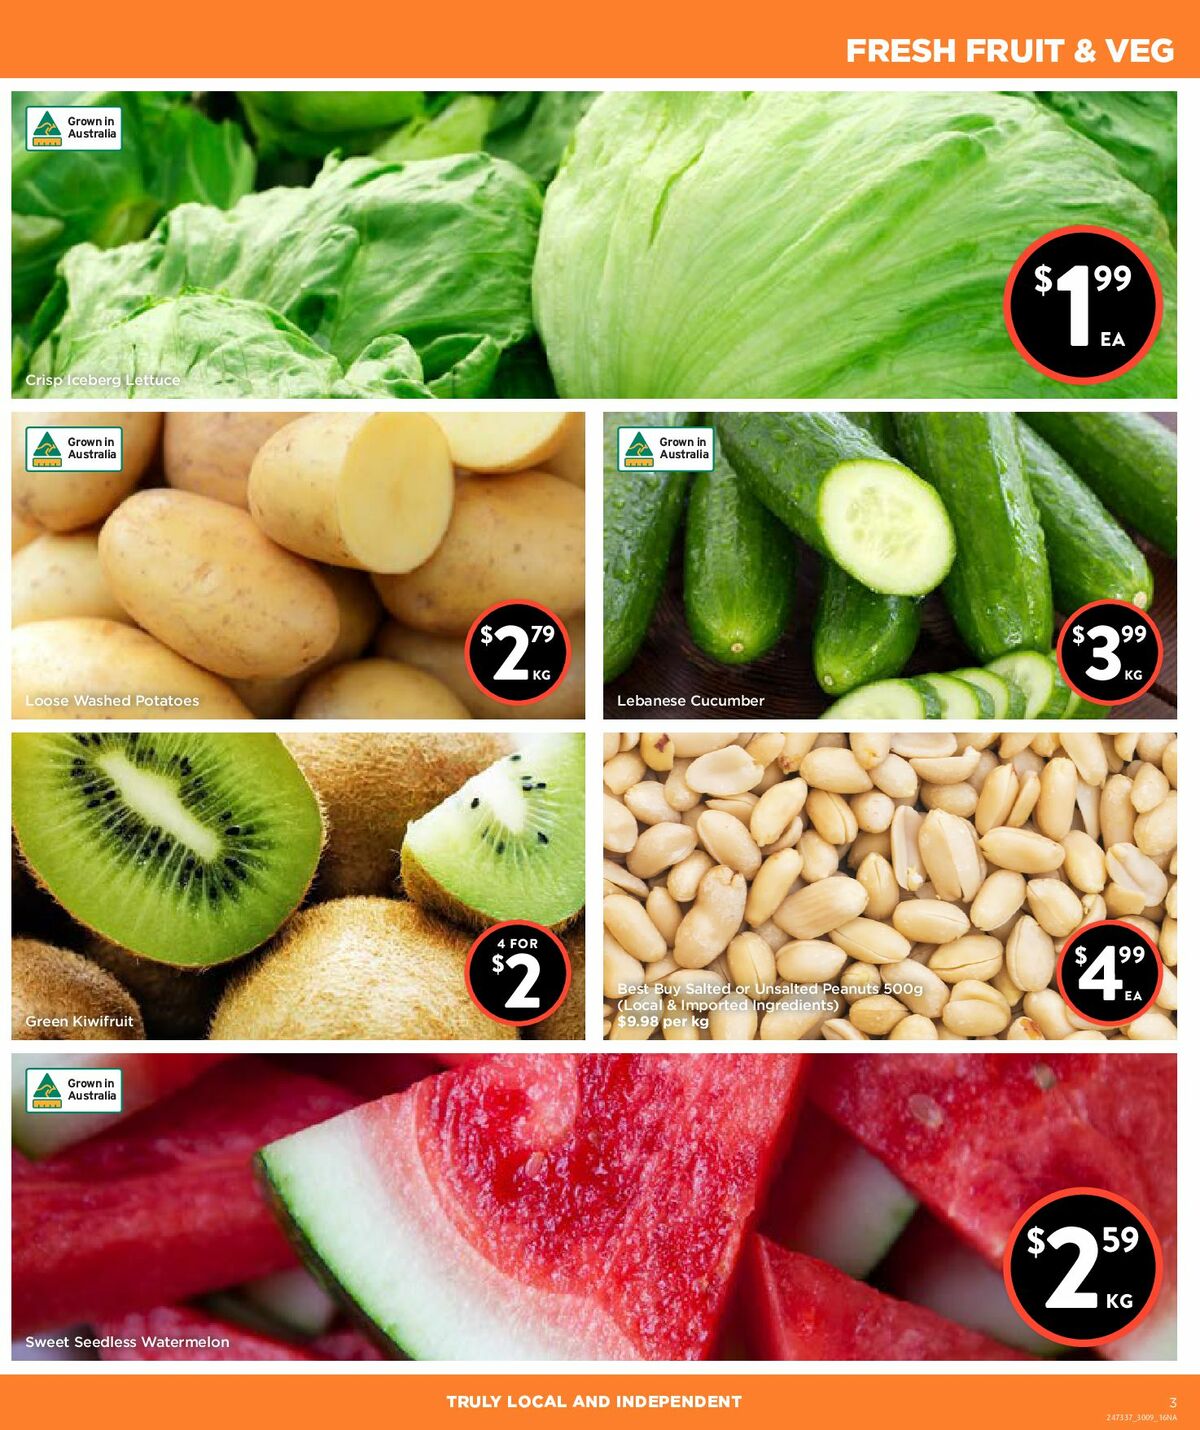 FoodWorks Supermarket Catalogues from 30 September